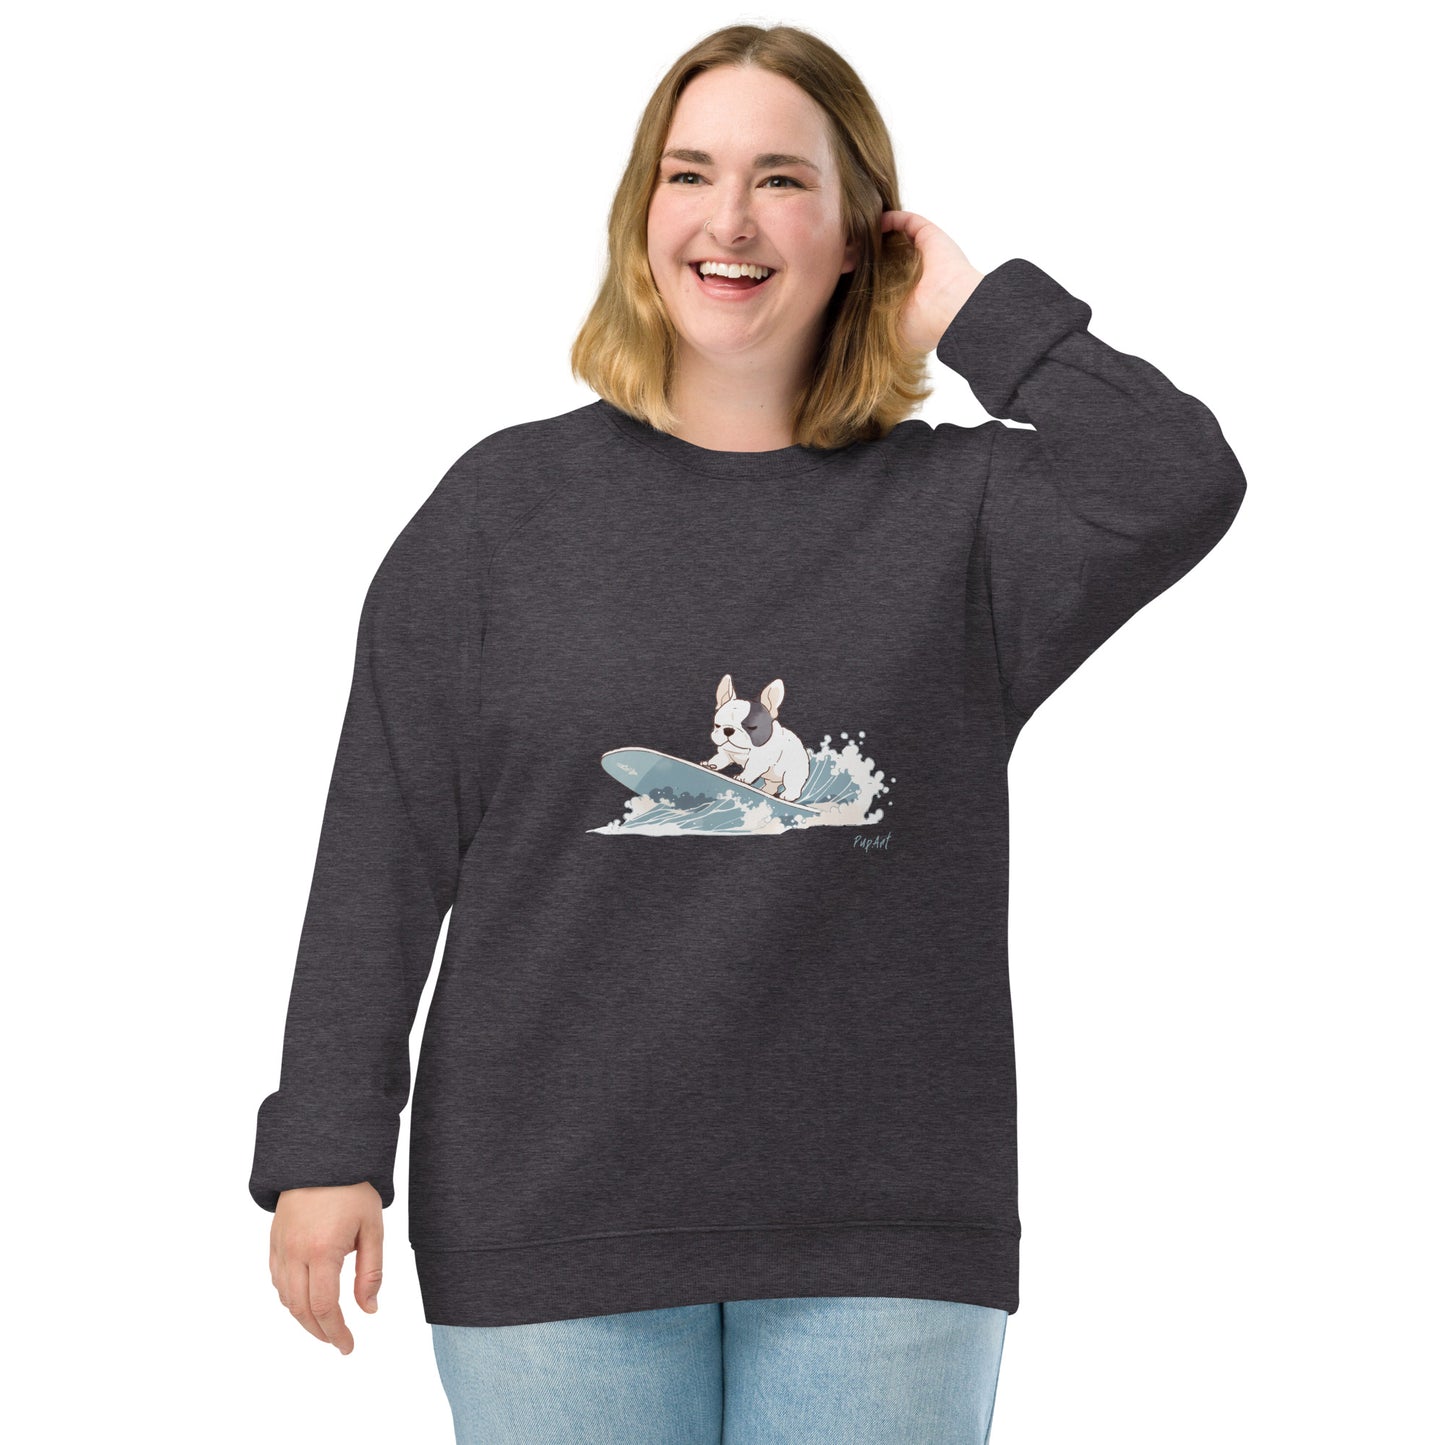 Unisex organic raglan sweatshirt with surfing french bulldog